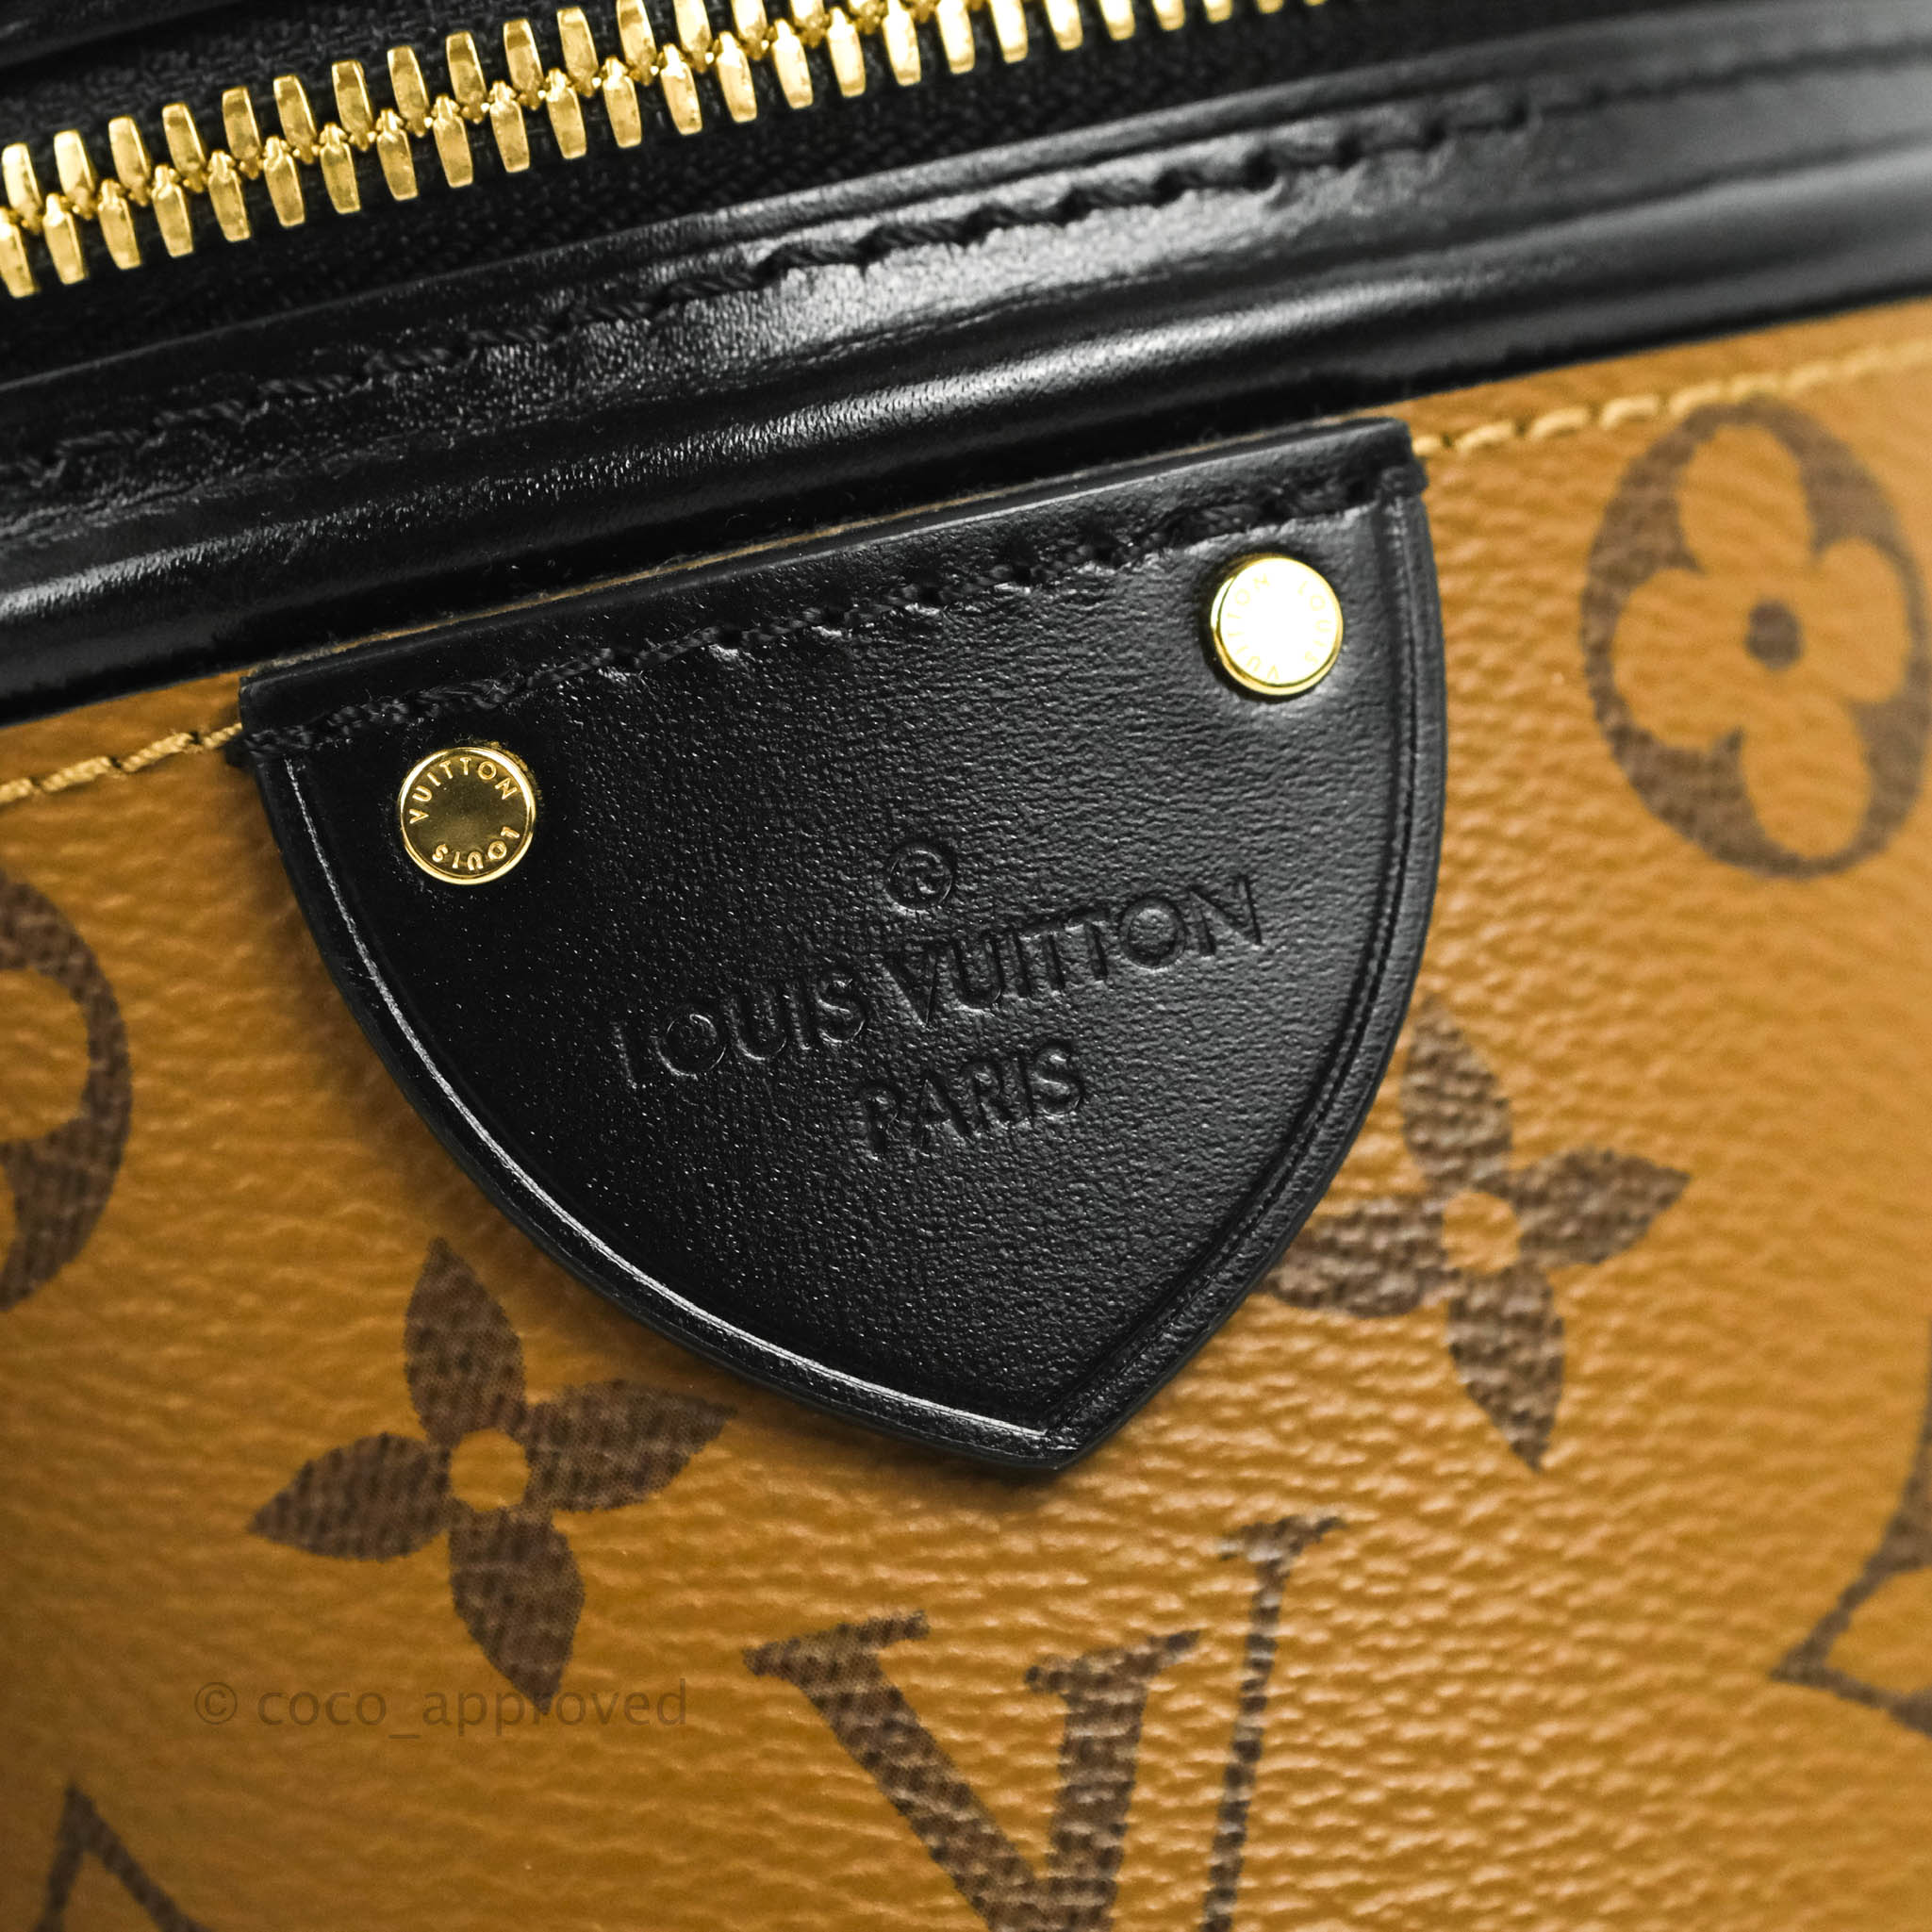 Sold at Auction: Louis Vuitton, LOUIS VUITTON handbag, model Tivoli